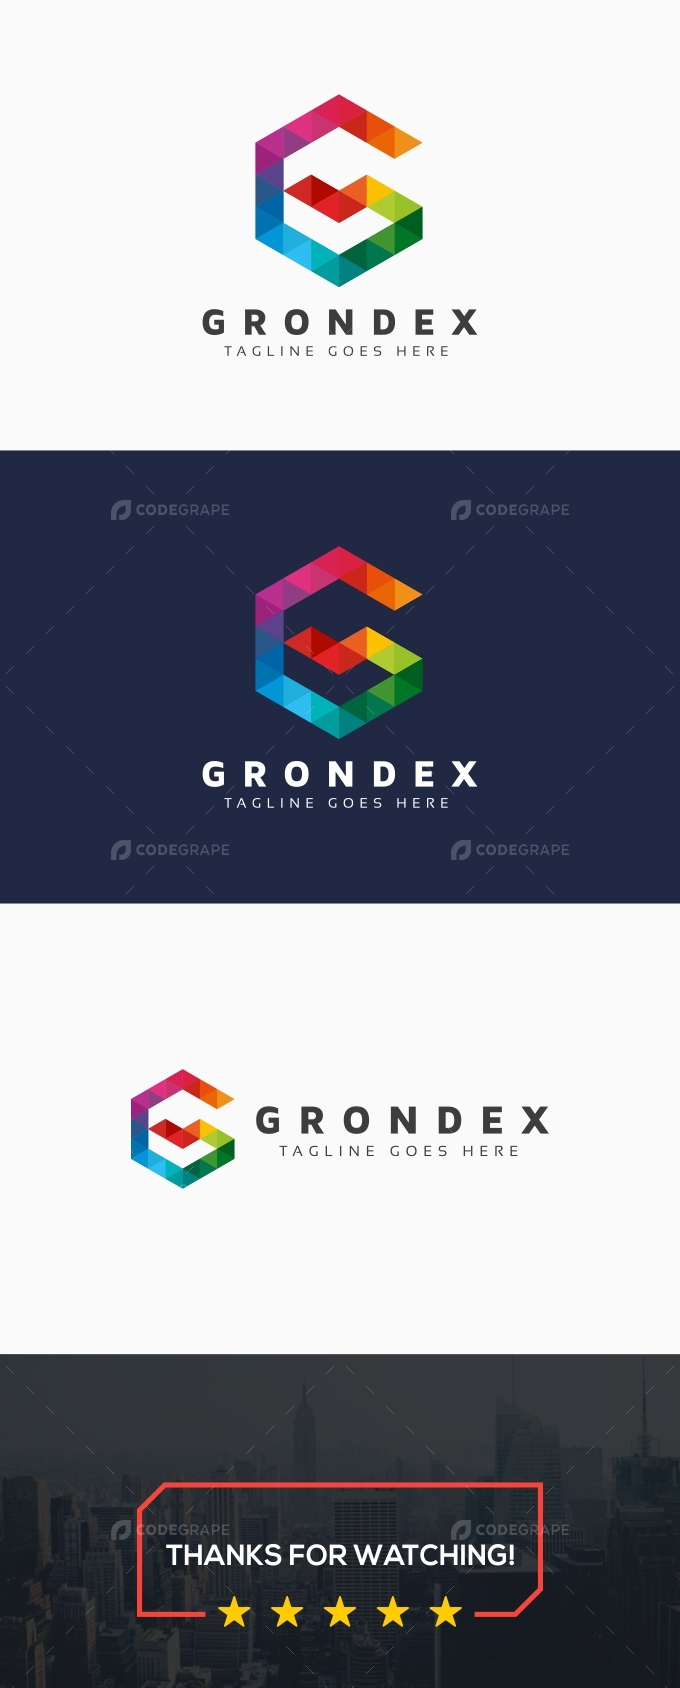 G Letter Colorful Logo